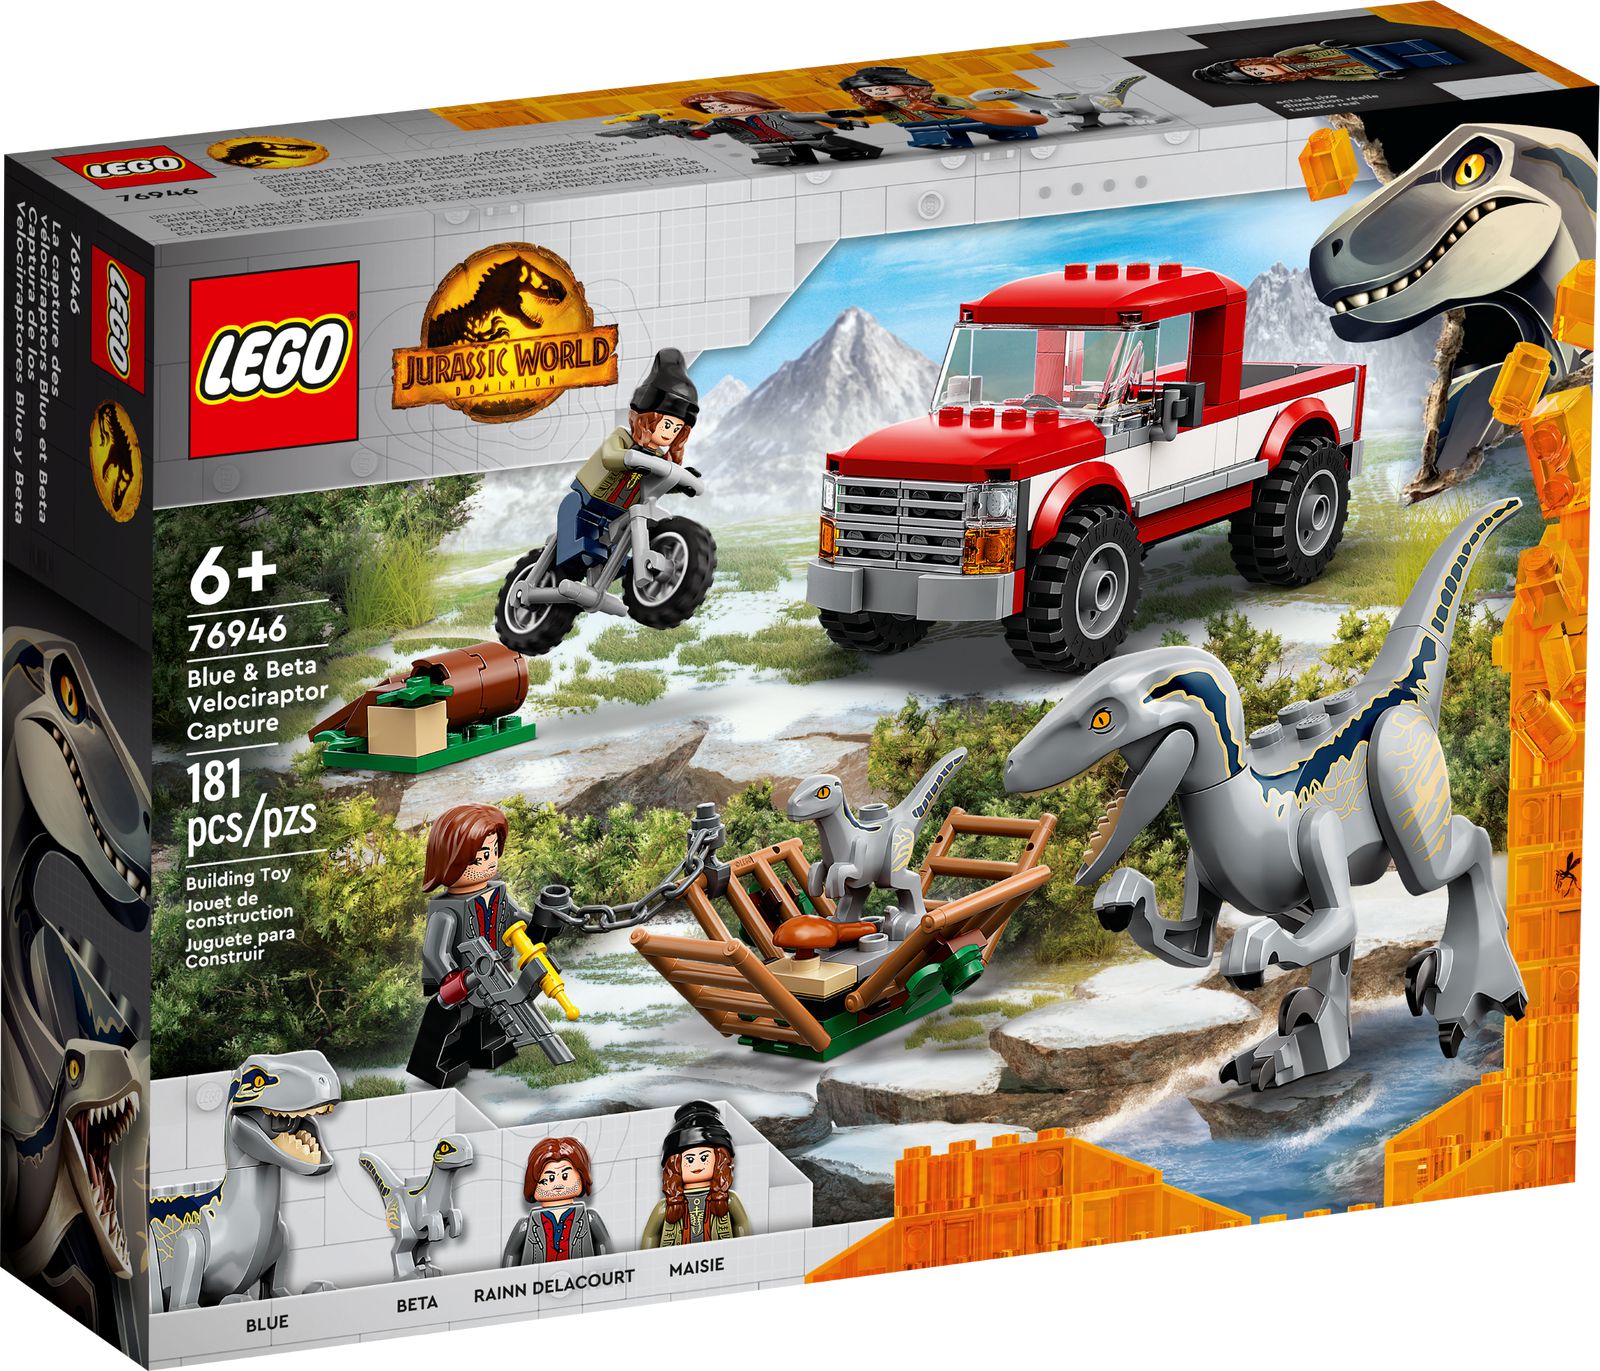 E.Leclerc Rzeszów - Hipermarket | | 76946 Lego Jurassic World 